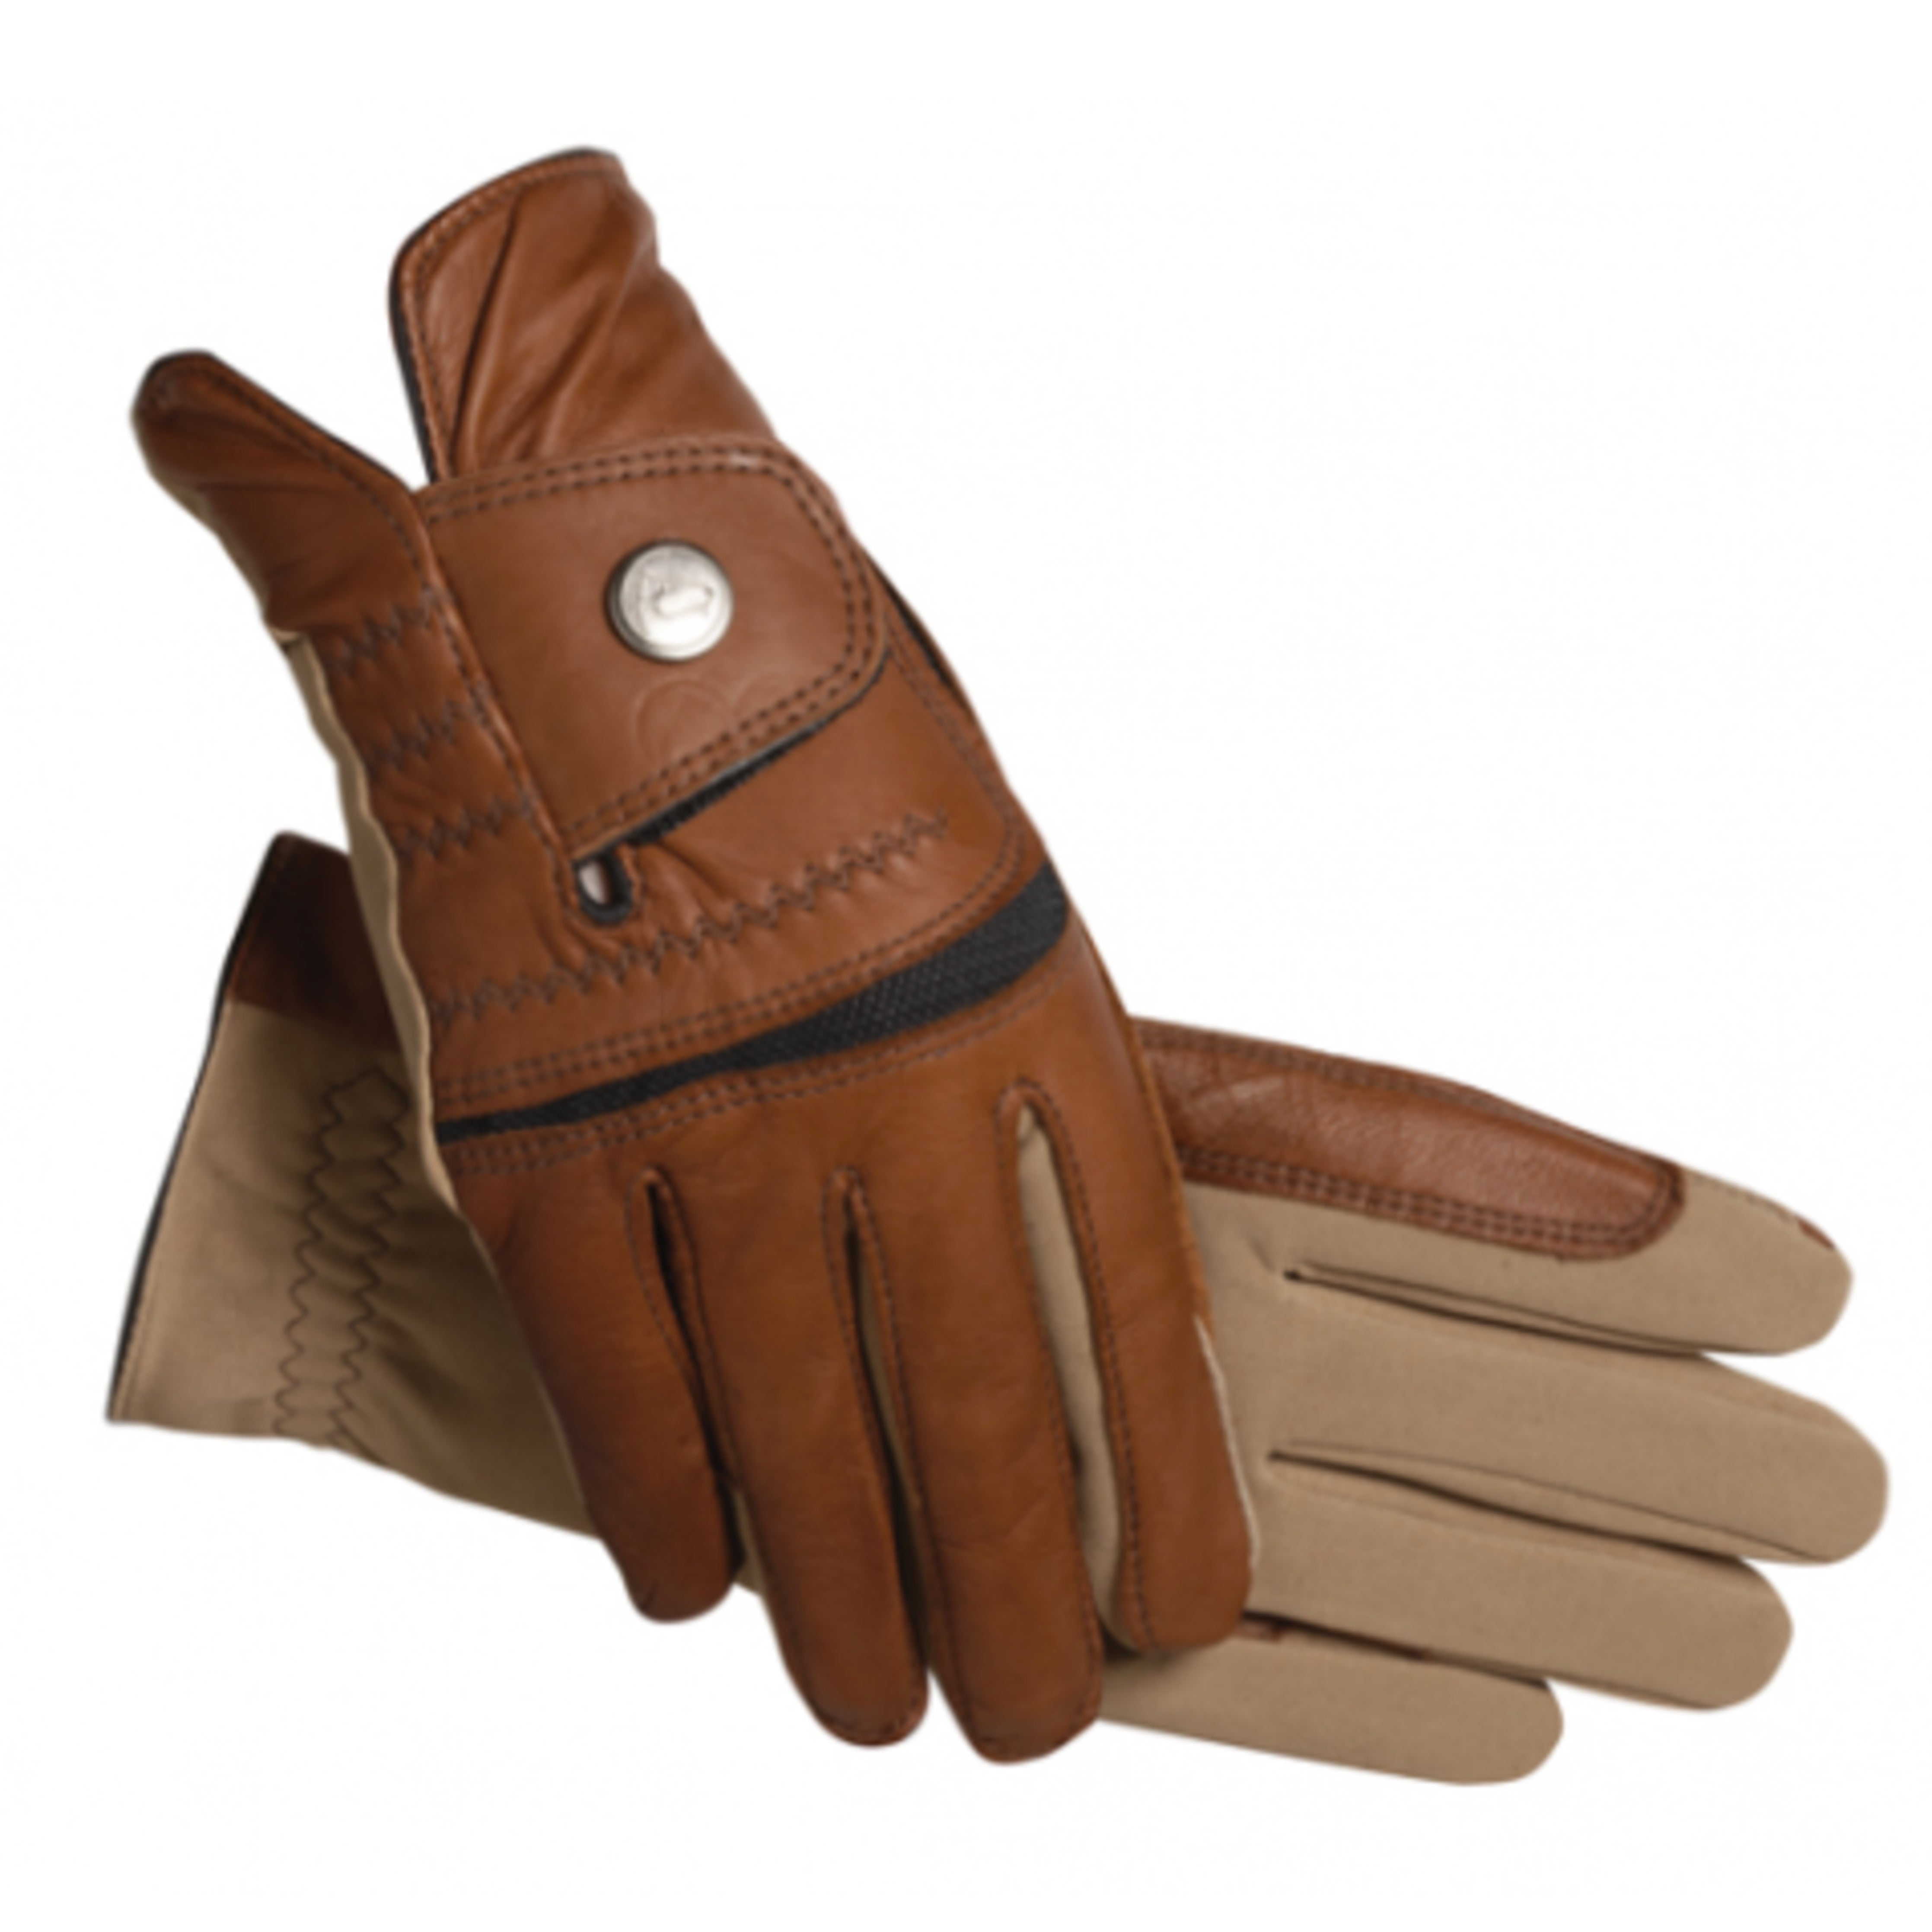 SSG Gloves 4200 Hybrid Extreme